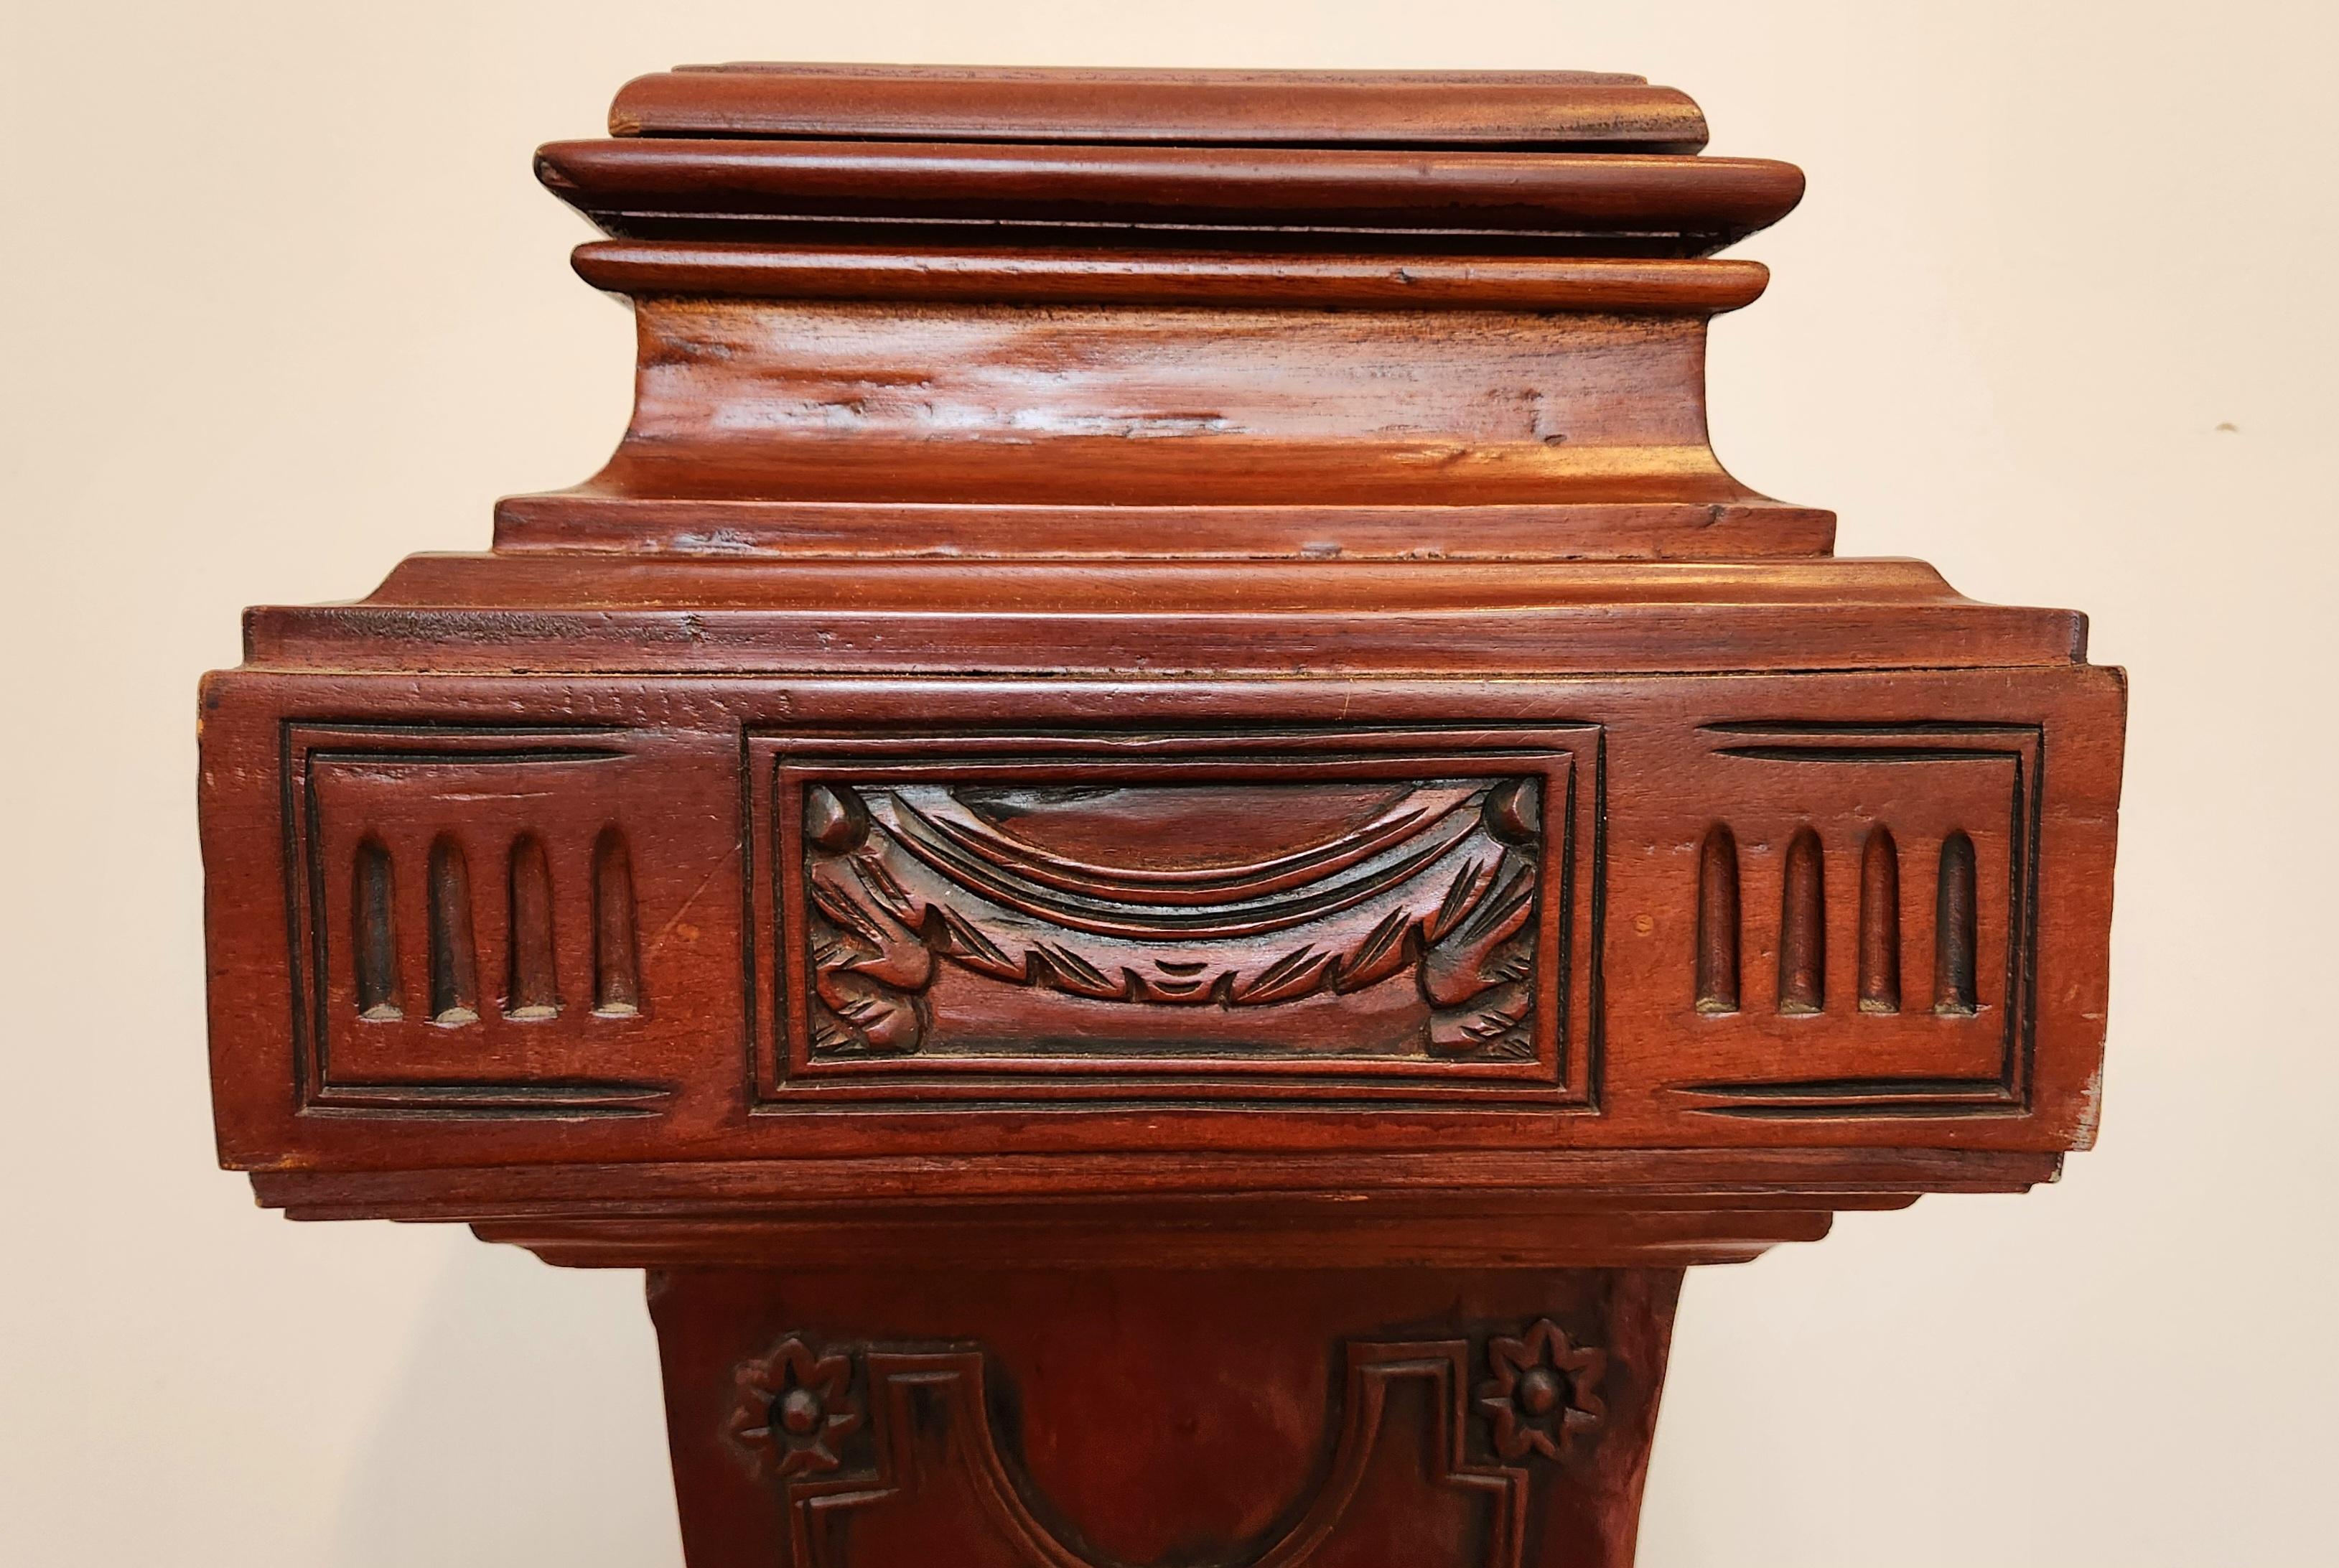 19th Century American Wooden Pedestal - Sculpture by Unknown